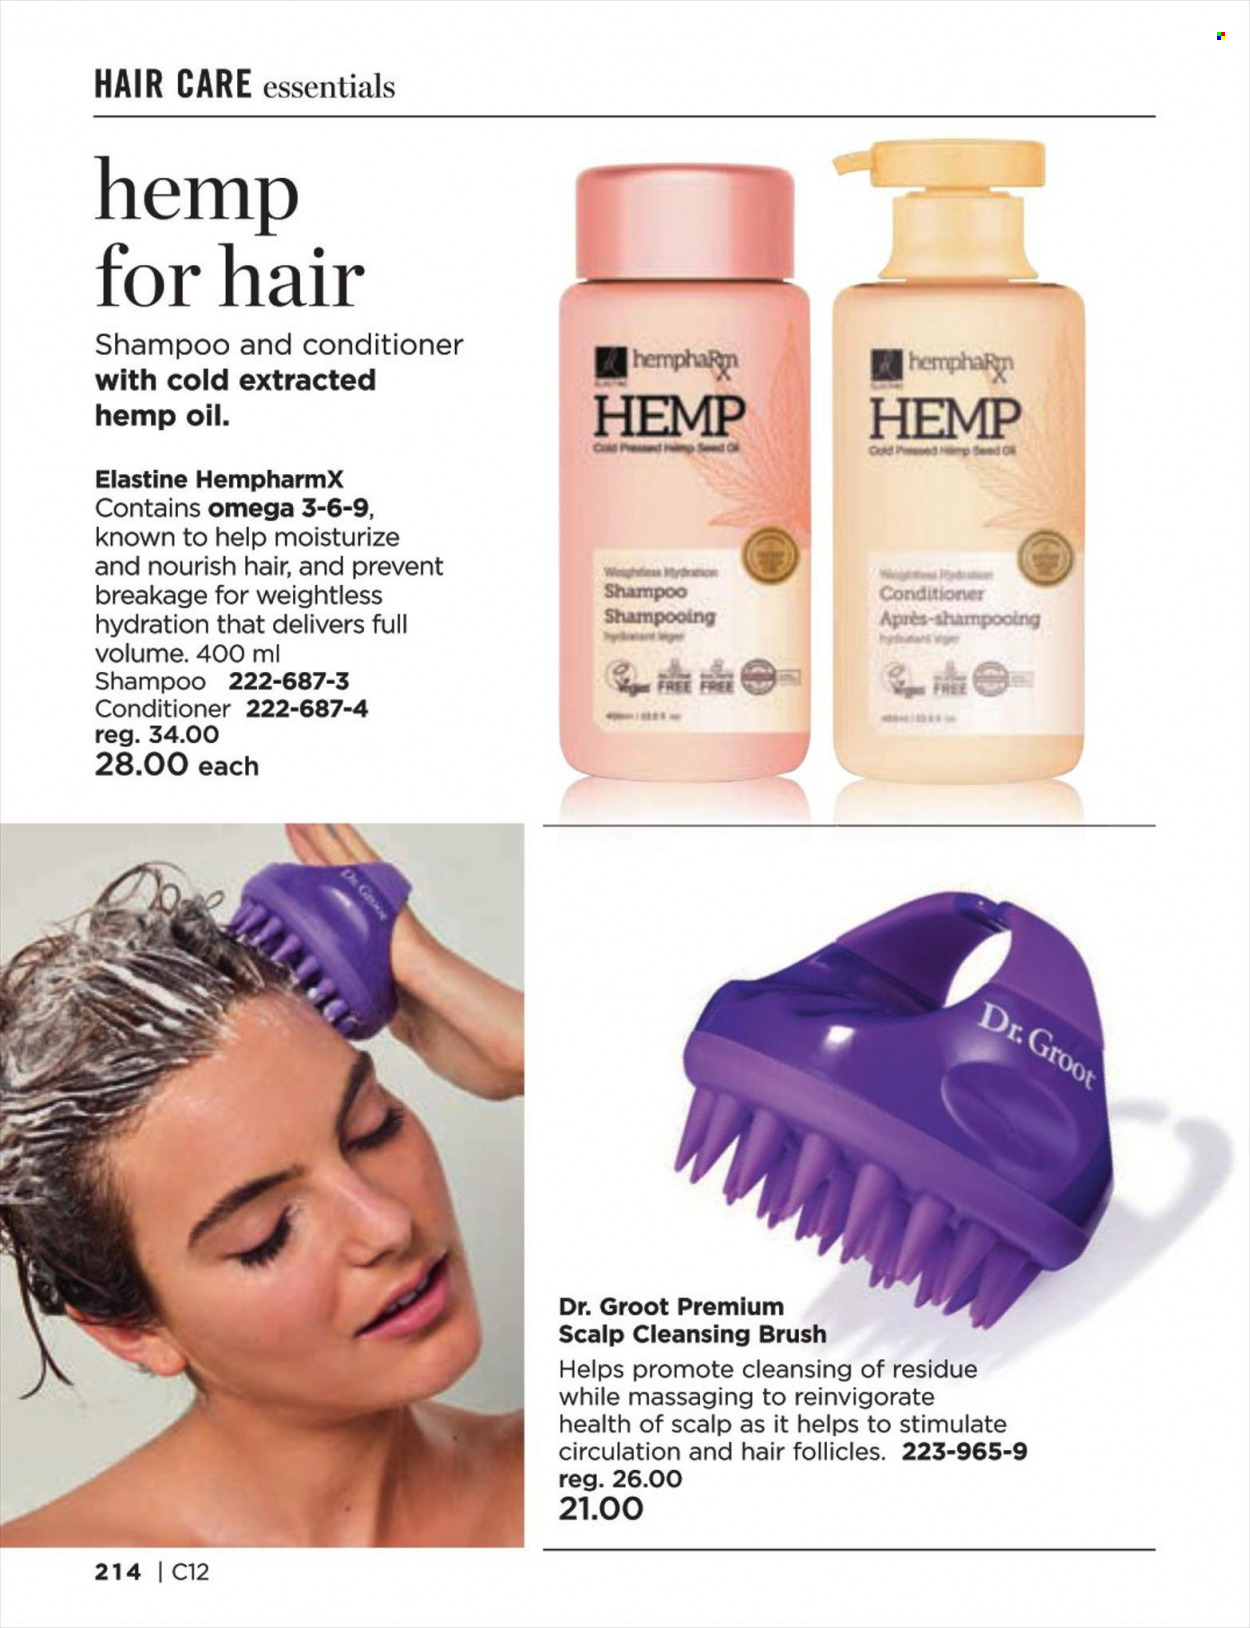 thumbnail - Circulaire Avon - Produits soldés - shampooing. Page 214.